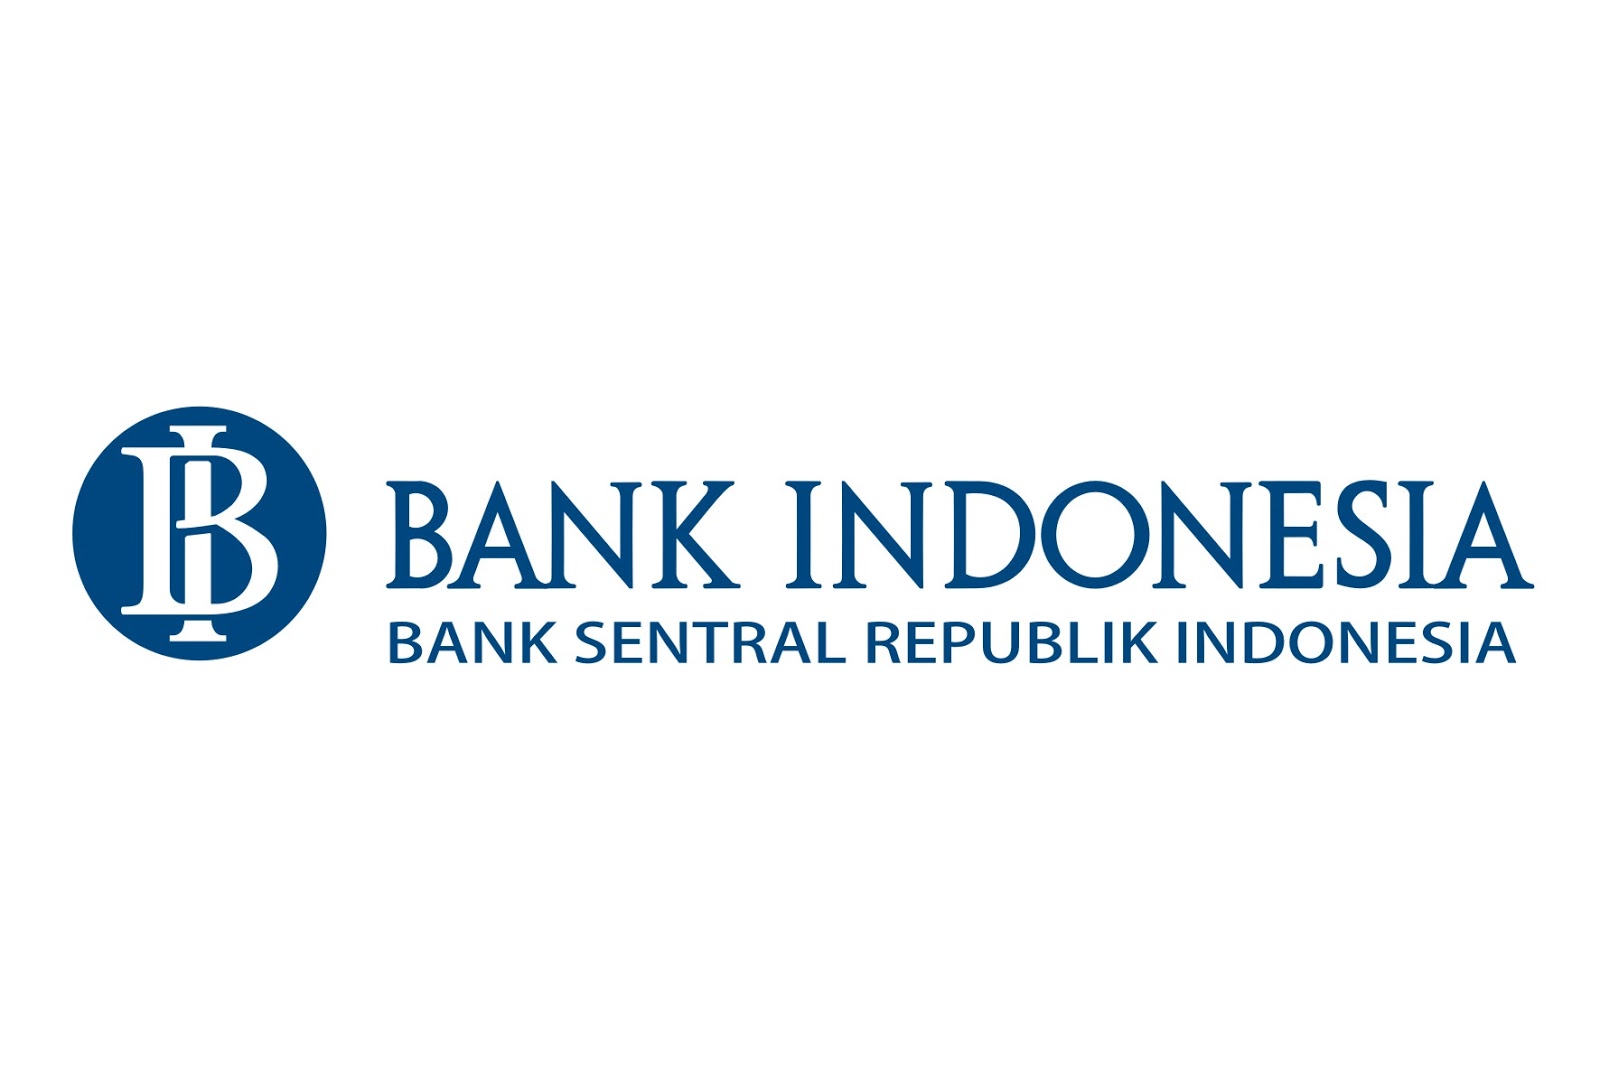  Bank  Indonesia  Logo  Logo  Share